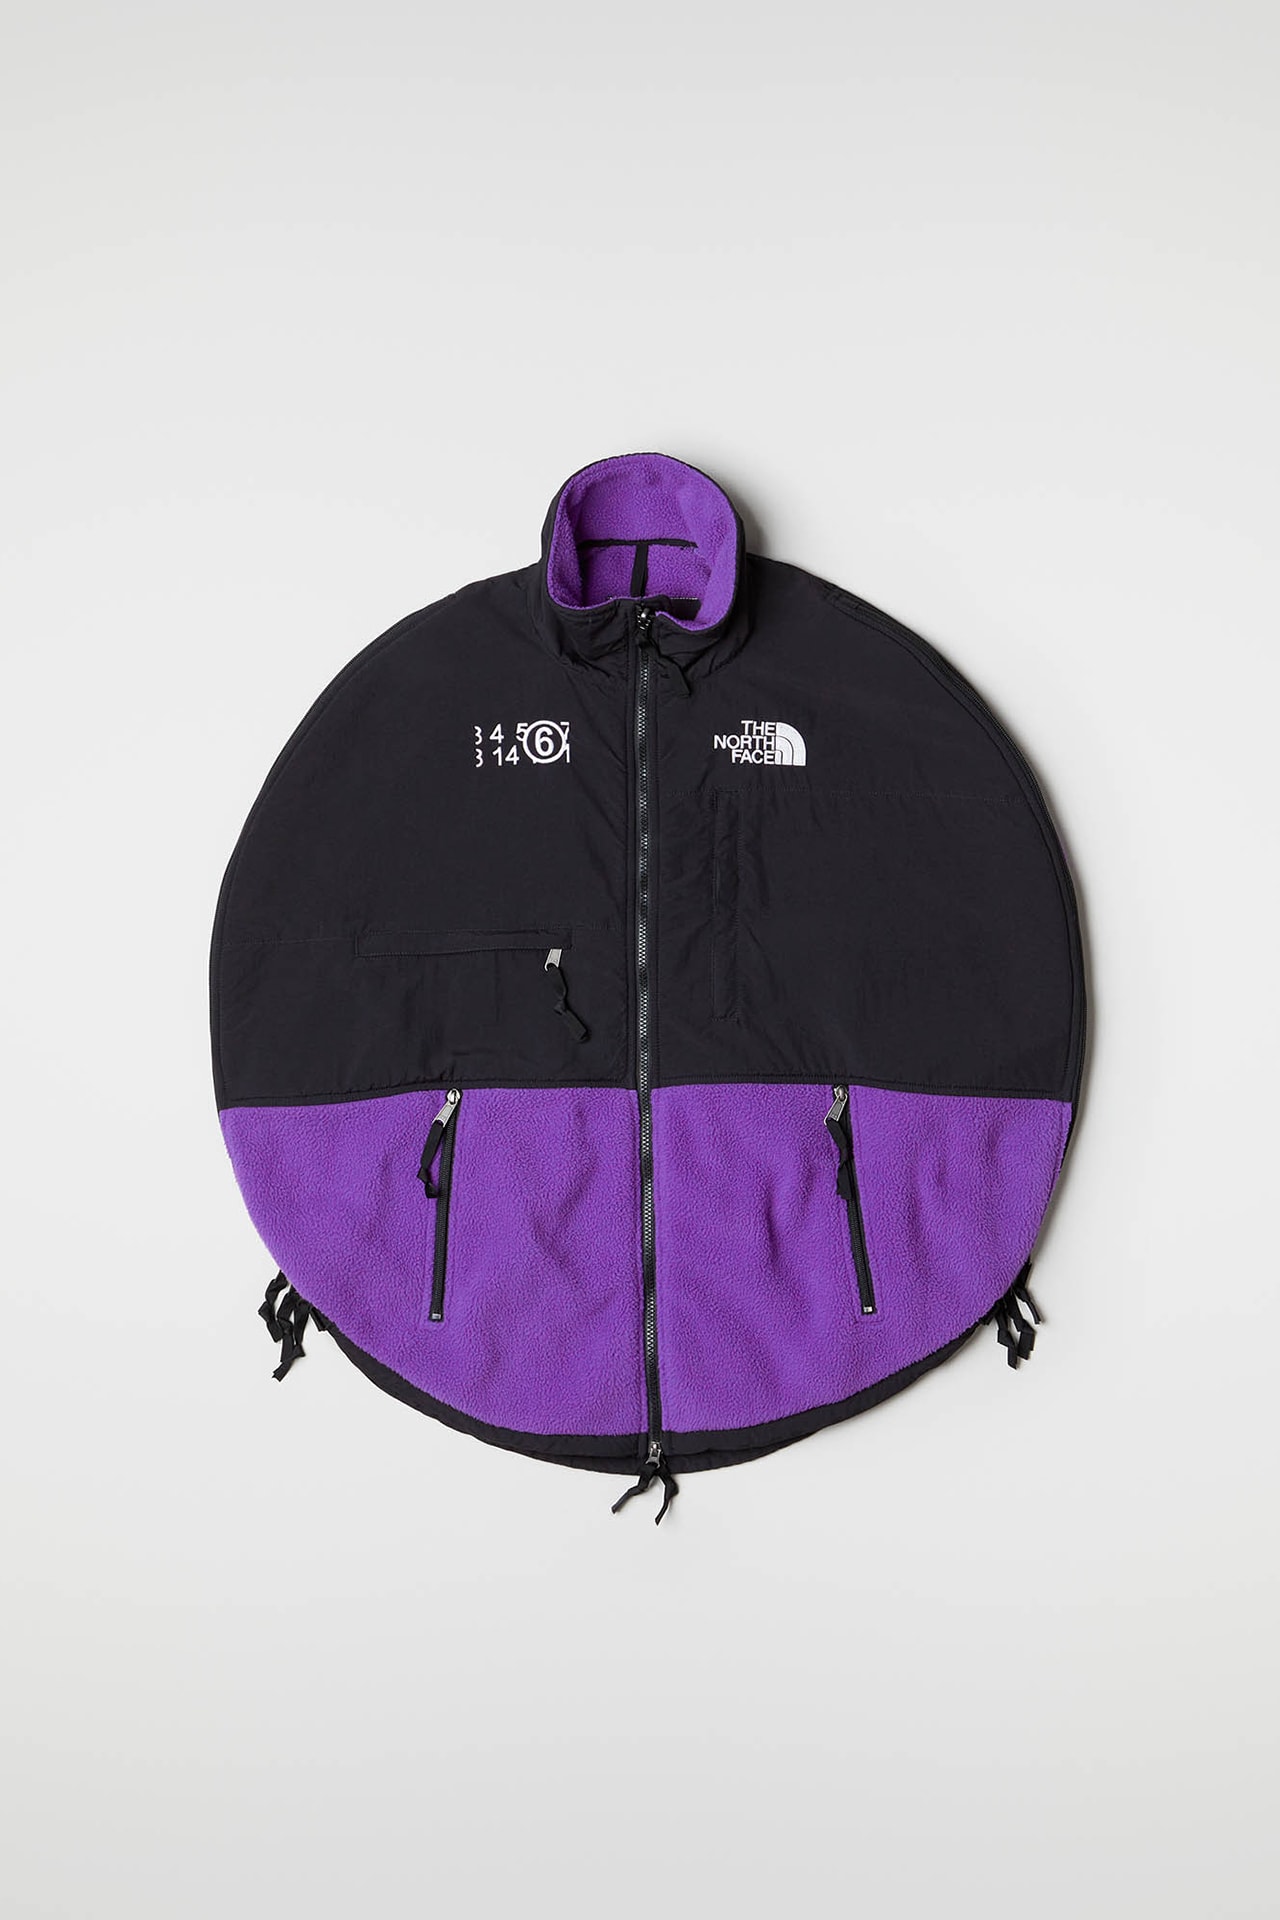 MM6 Maison Margiela The North Face Collaboration Fall Winter 2020 Circle Denali Jacket Purple